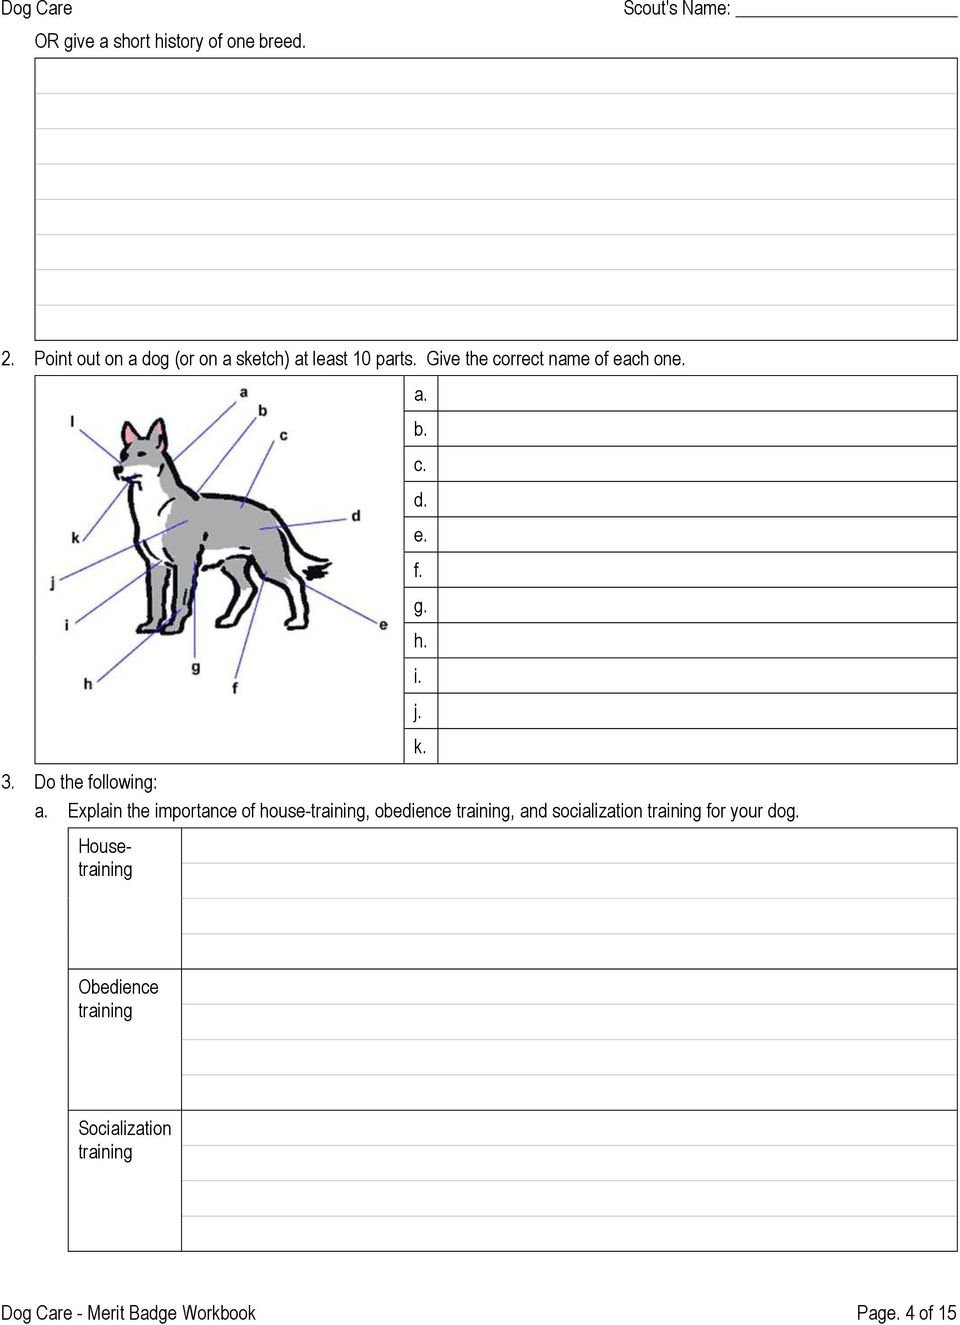 Dog Care Merit Badge Workbook  Pdf Pertaining To Dog Care Merit Badge Worksheet